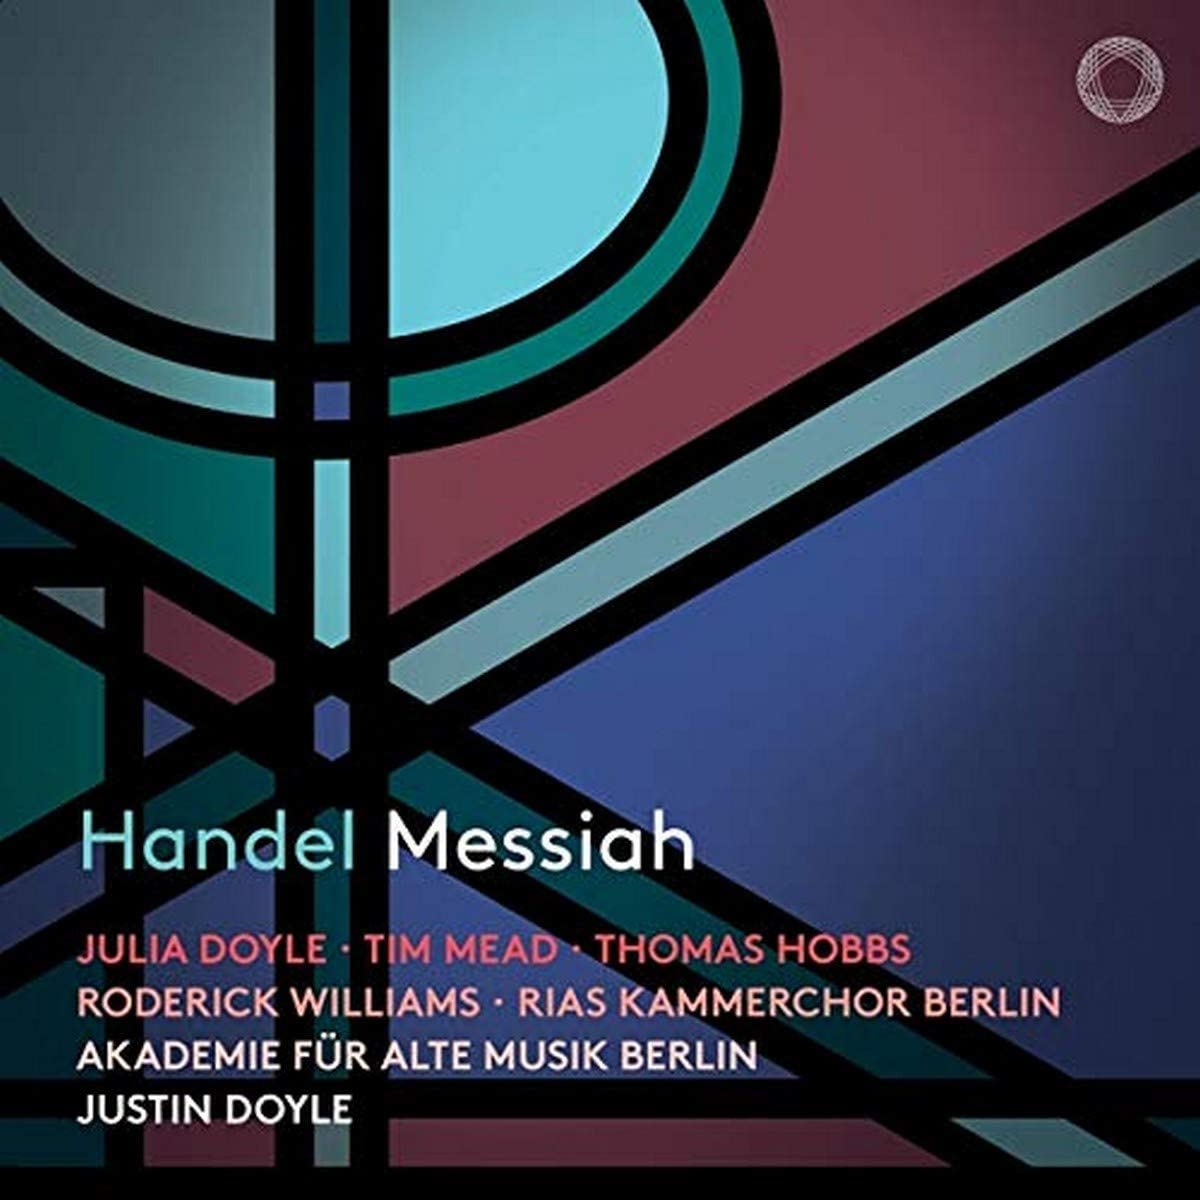 CD cover Pentatone Handel Messiah Justin Doyle RIAS